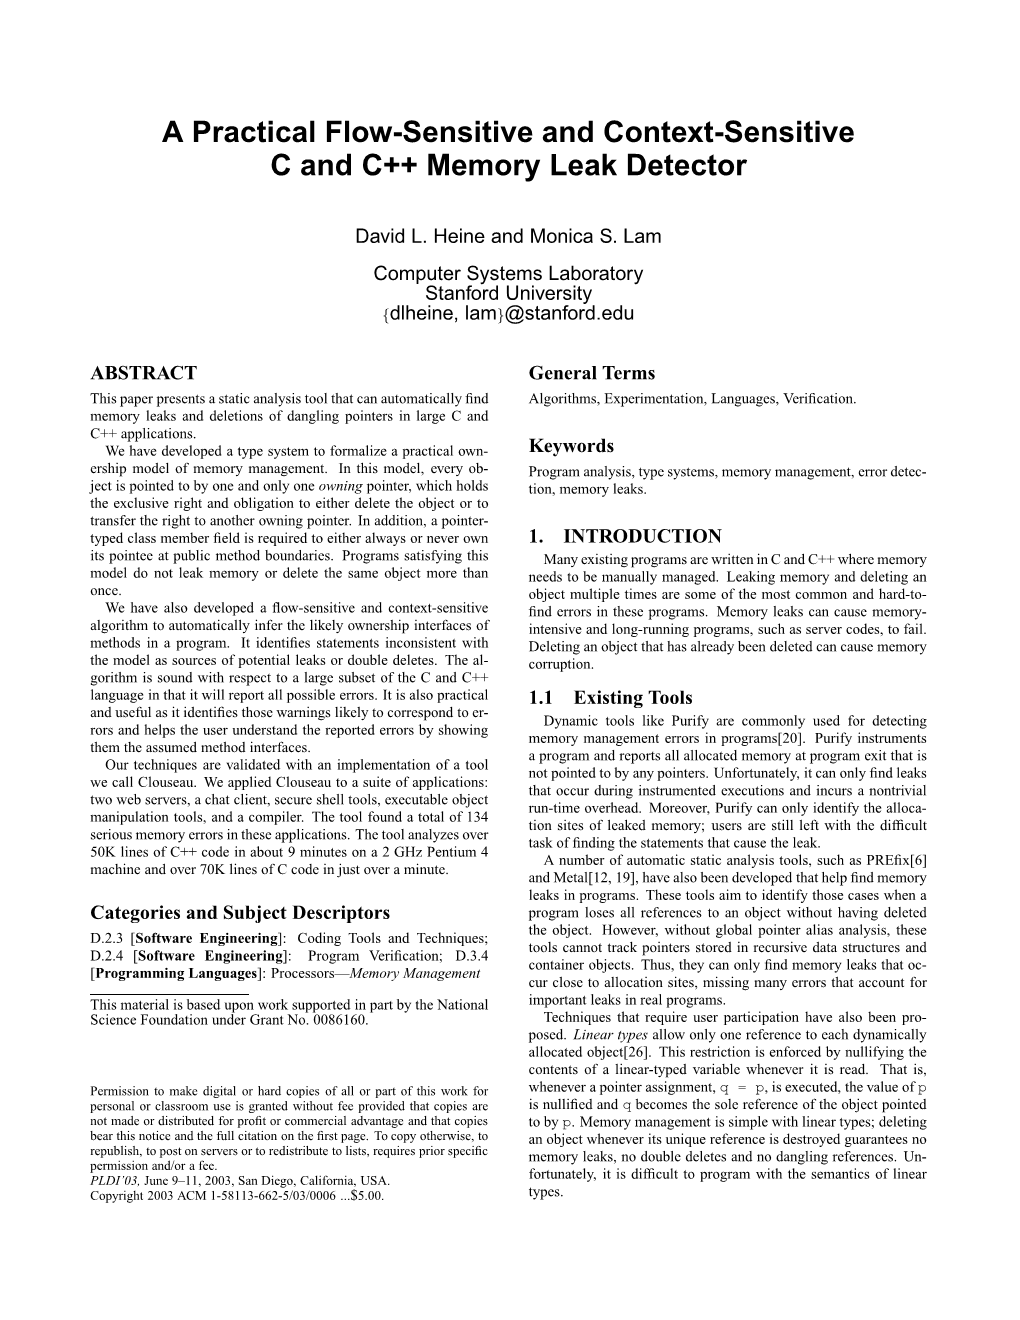 A Practical Flow-Sensitive and Context-Sensitive C and C++ Memory Leak Detector